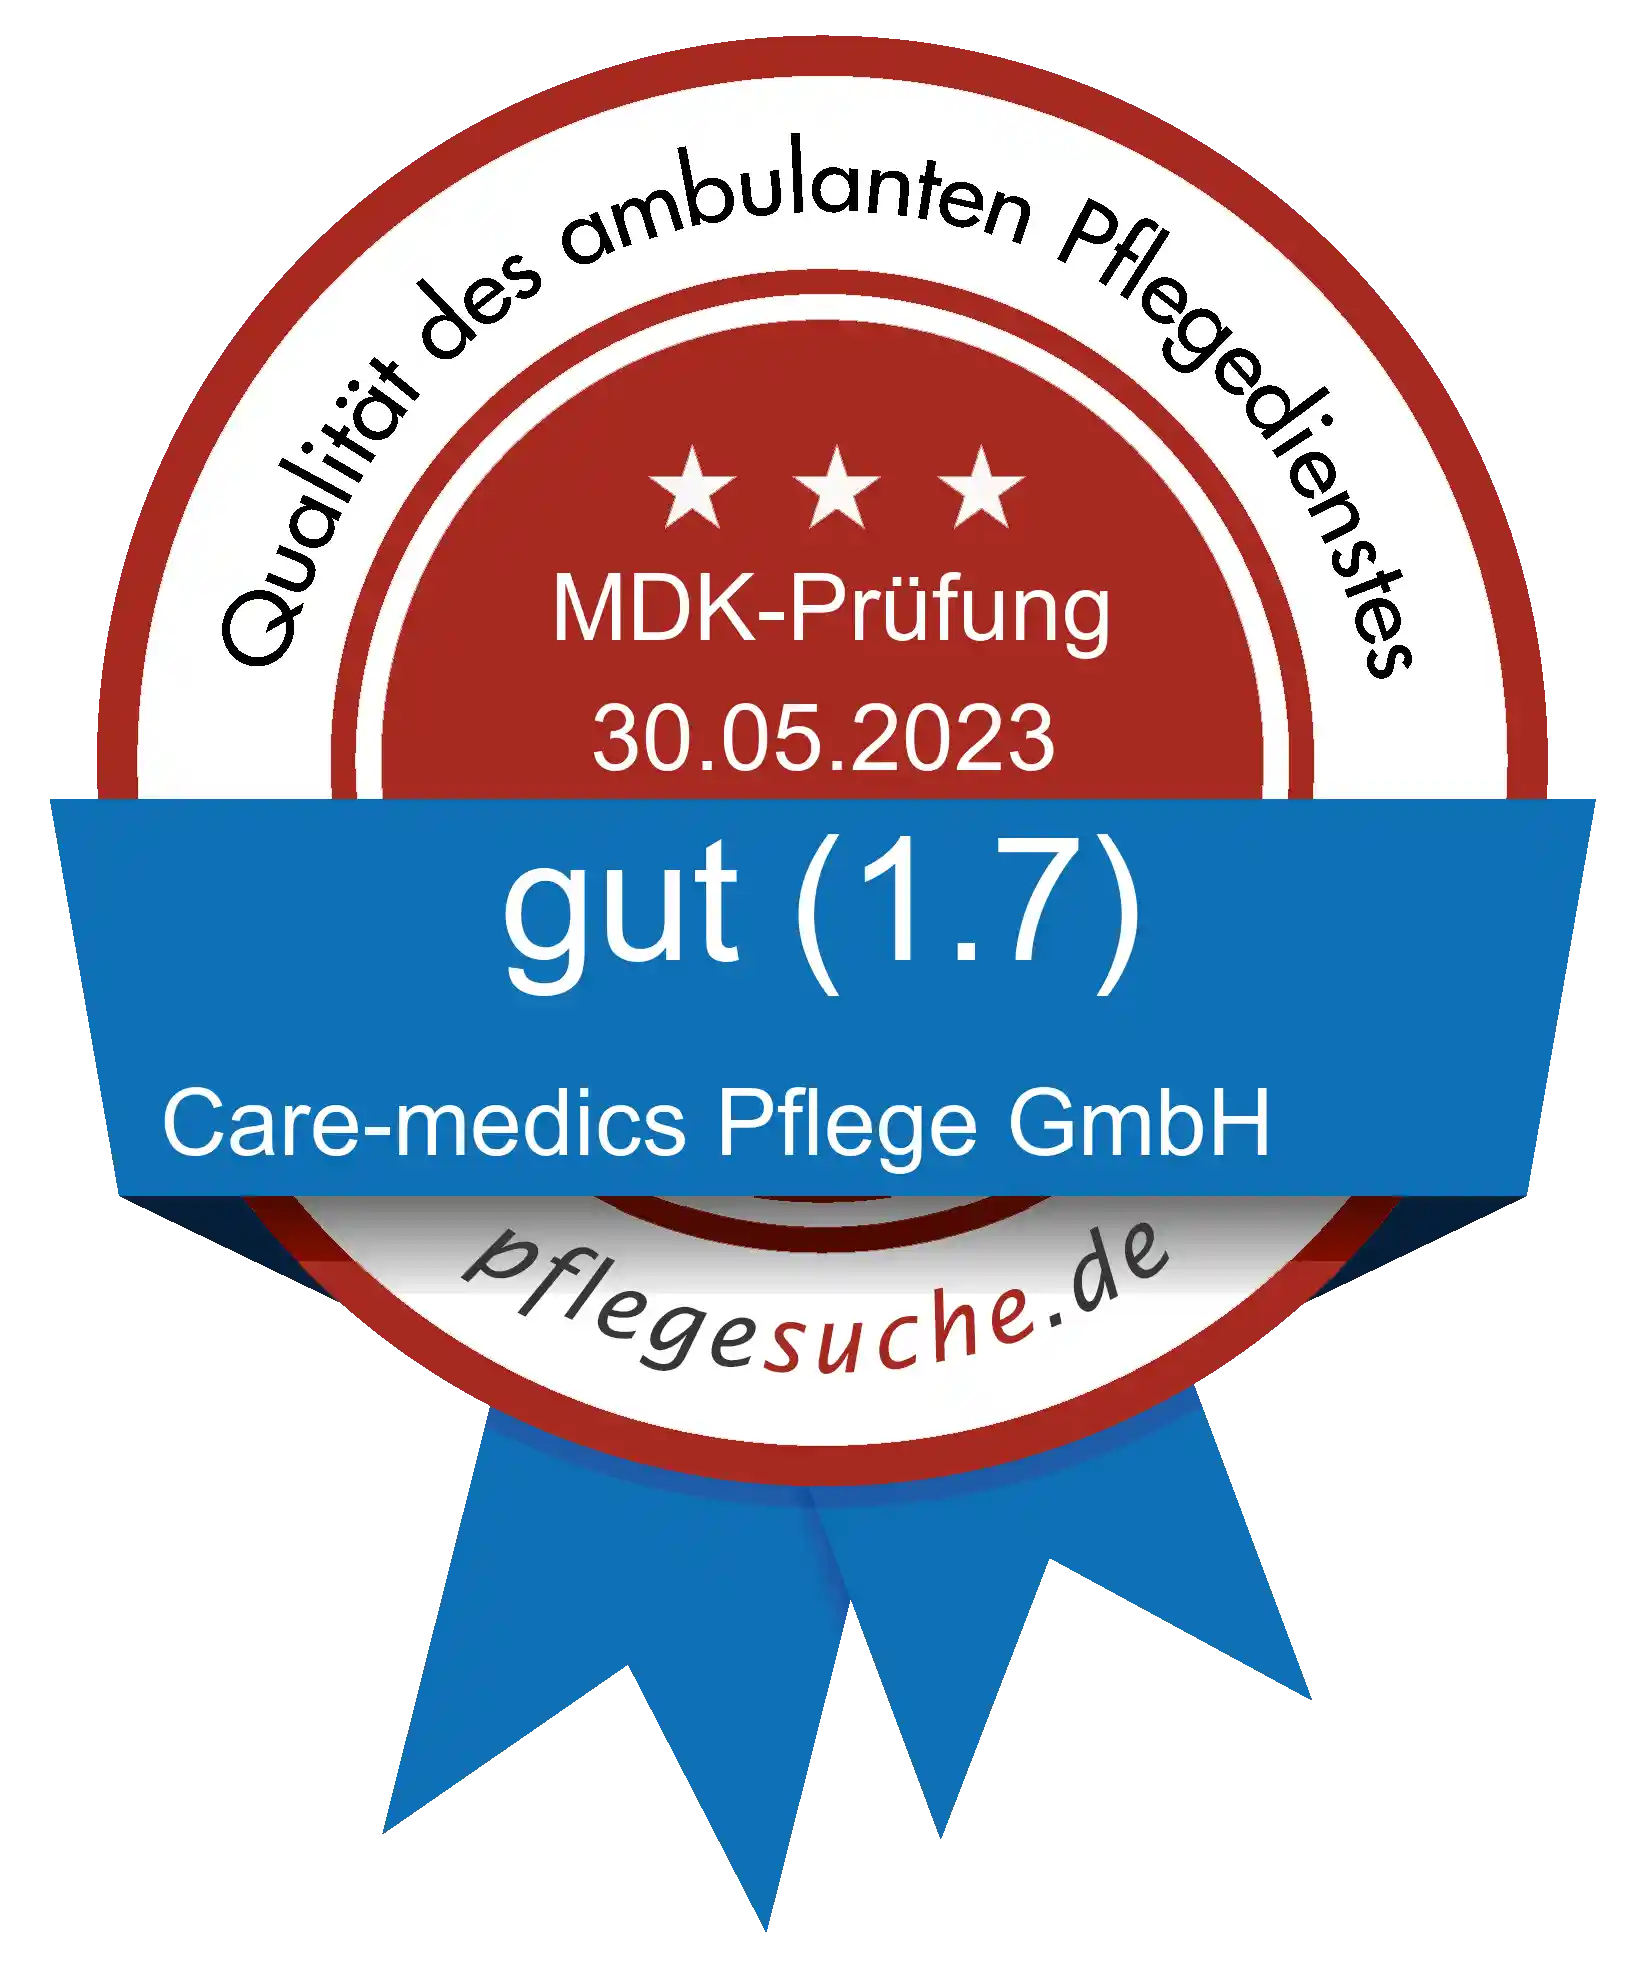 Siegel Benotung: Care-medics Pflege GmbH